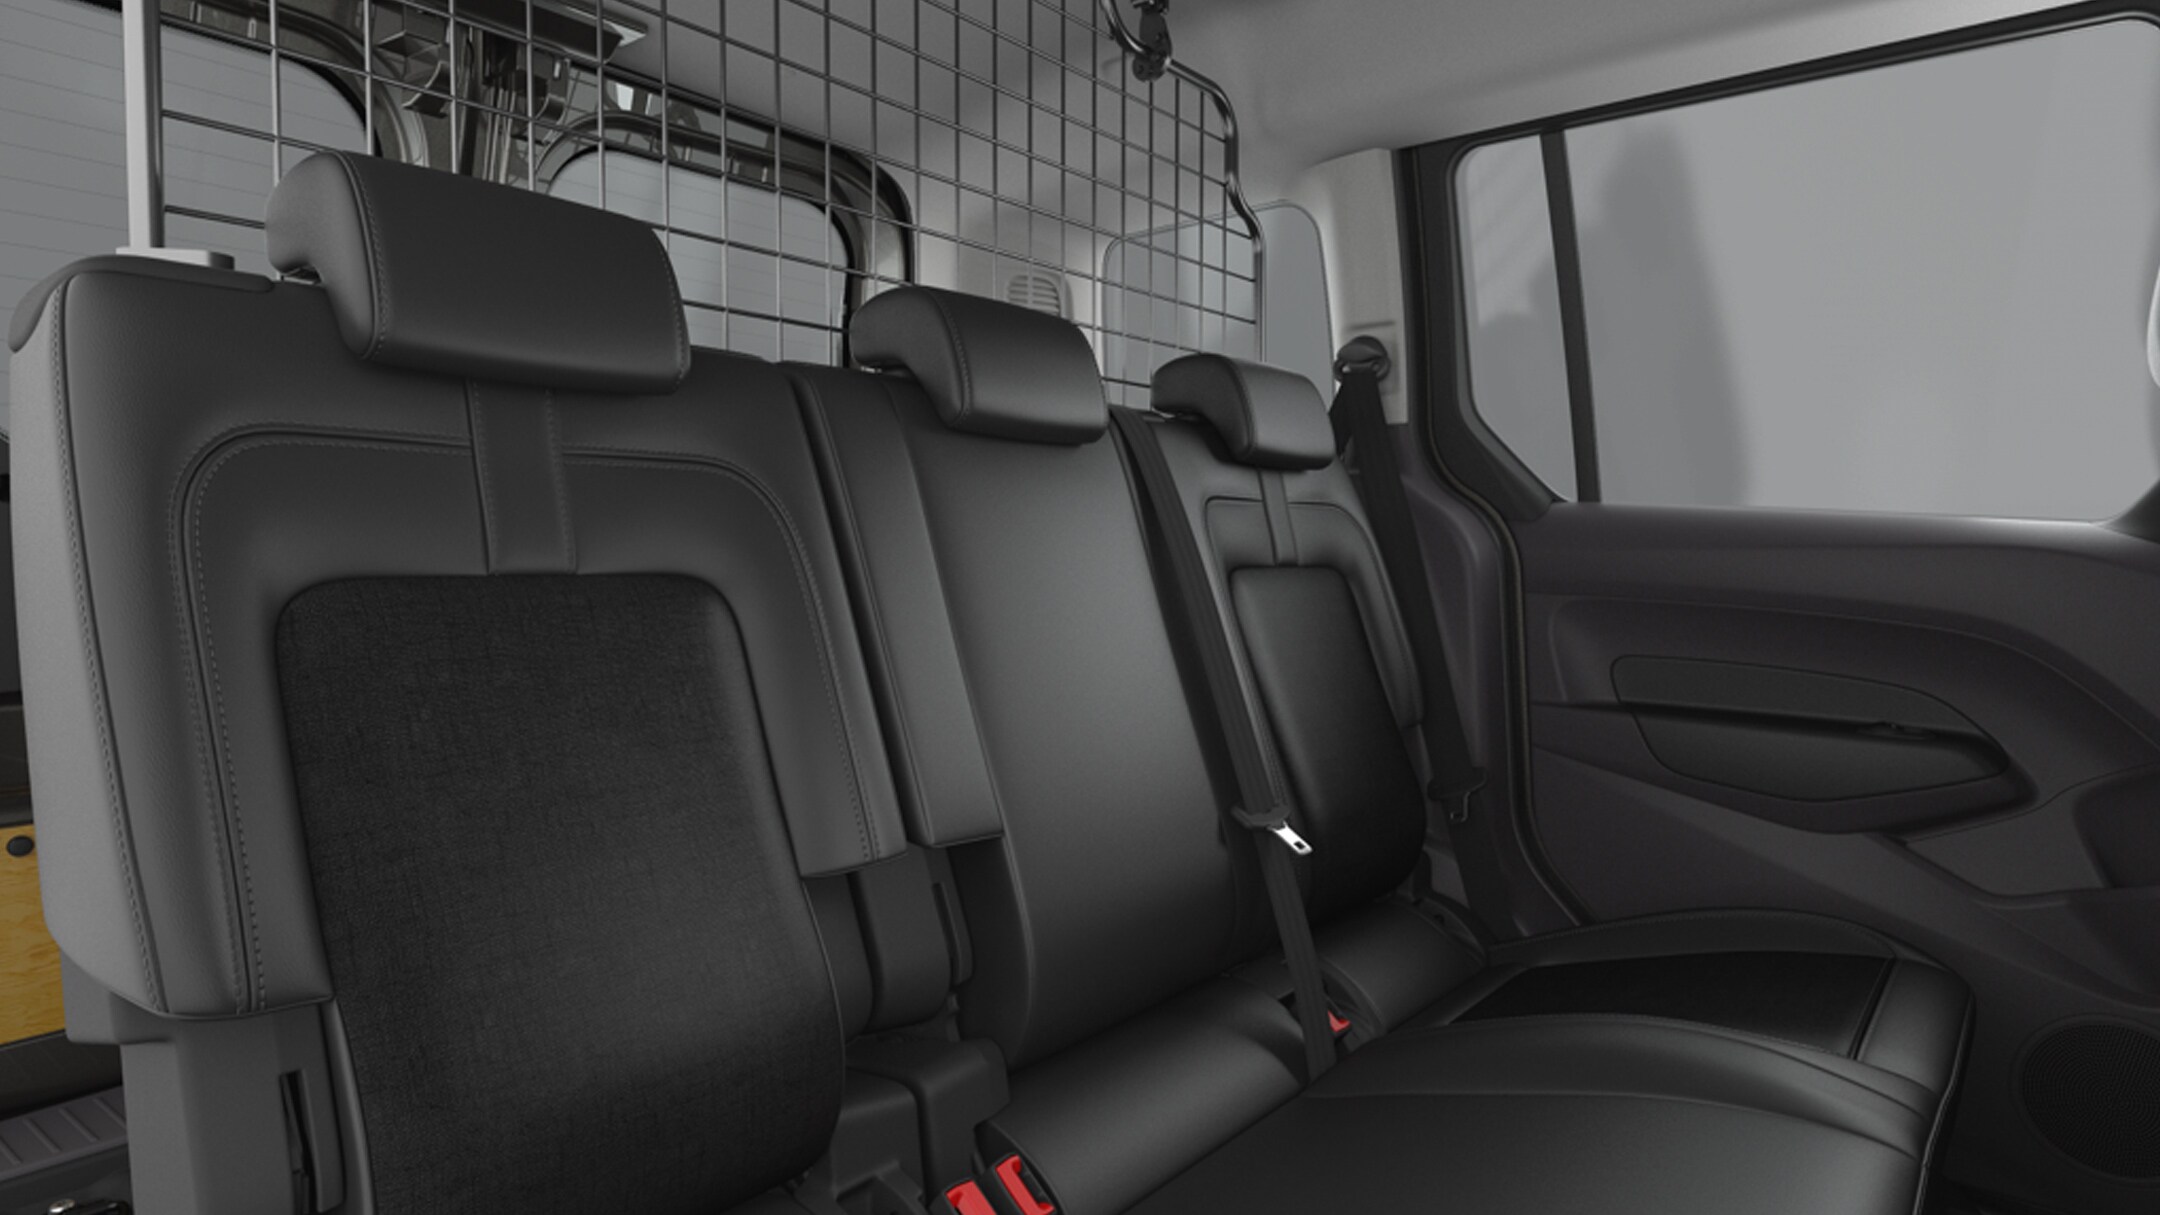 Ford Transit Connect Kombi interior with full mesh bulkhead